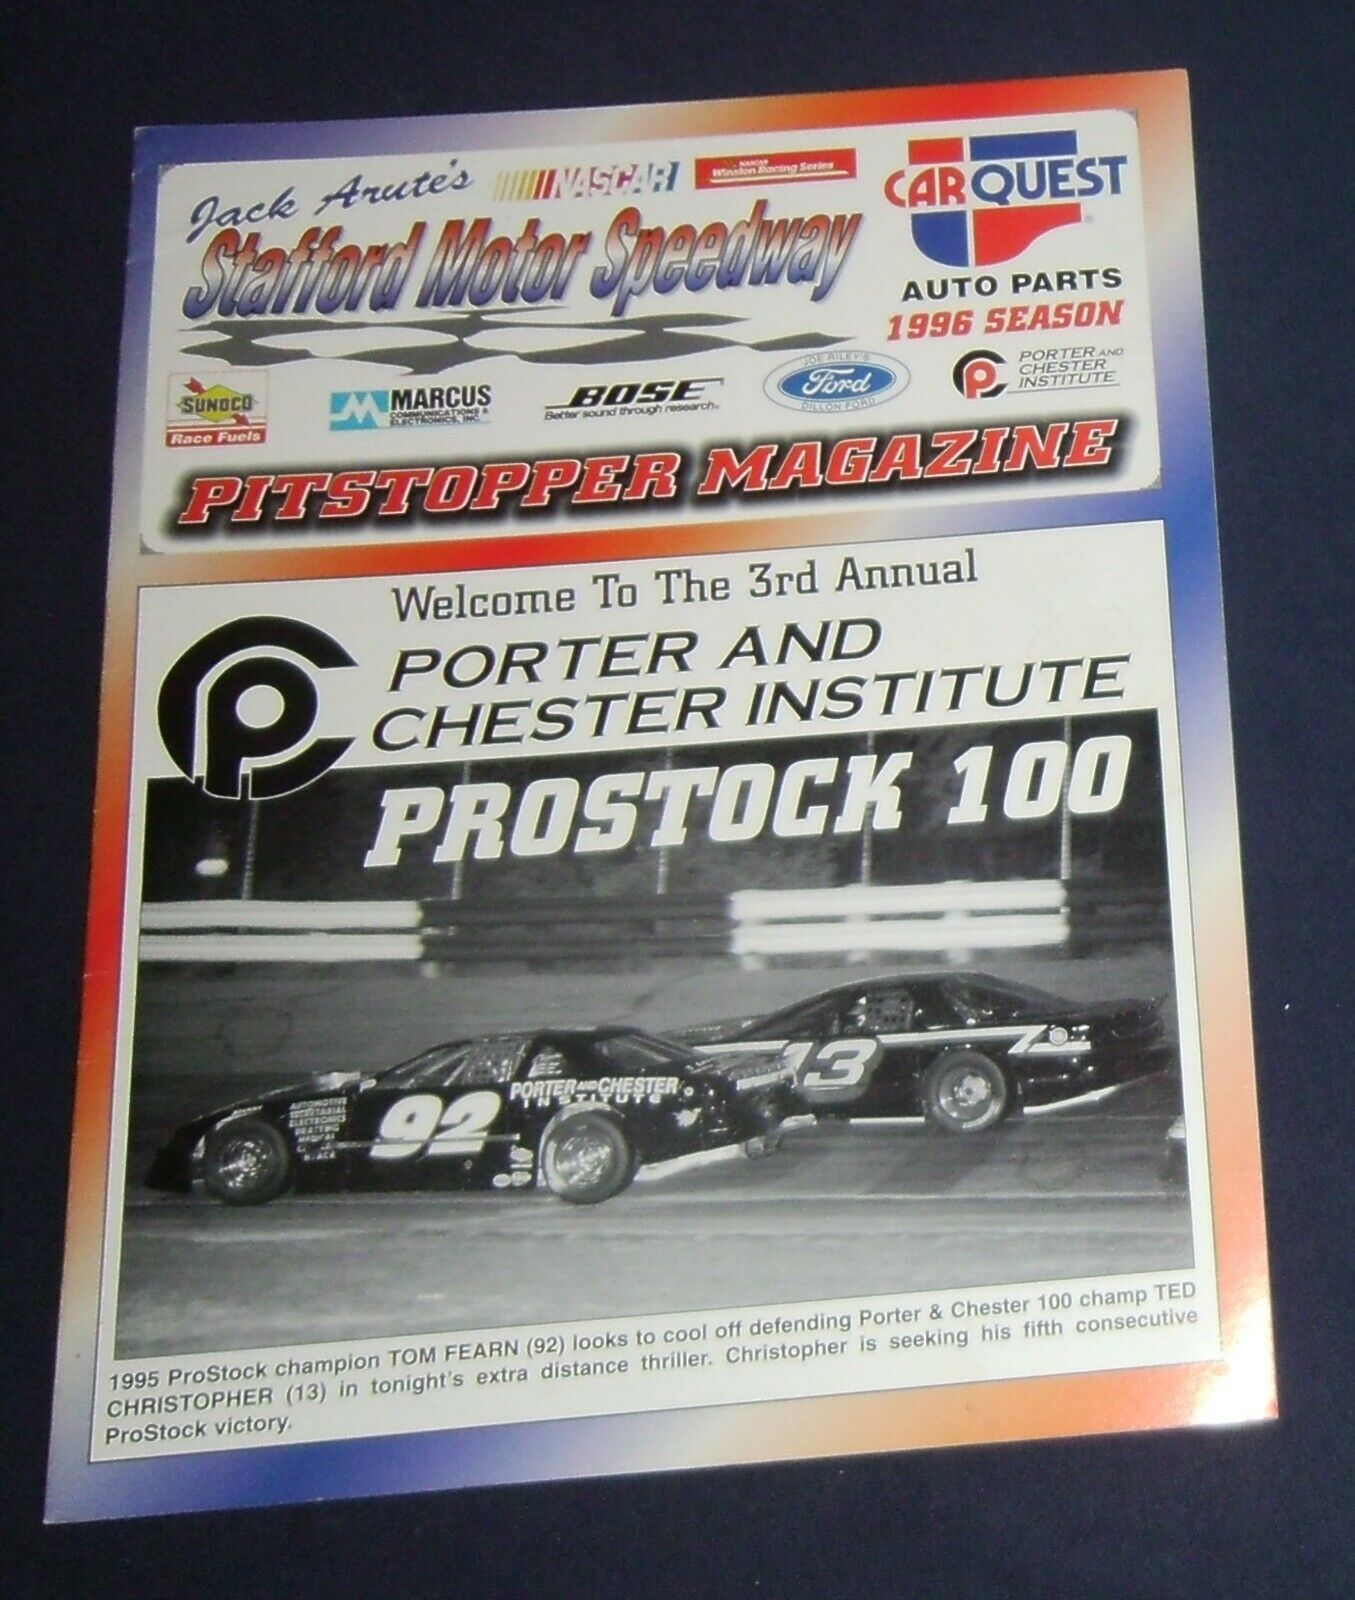 1996 Stafford Motor Speedway Prostock 100 Program